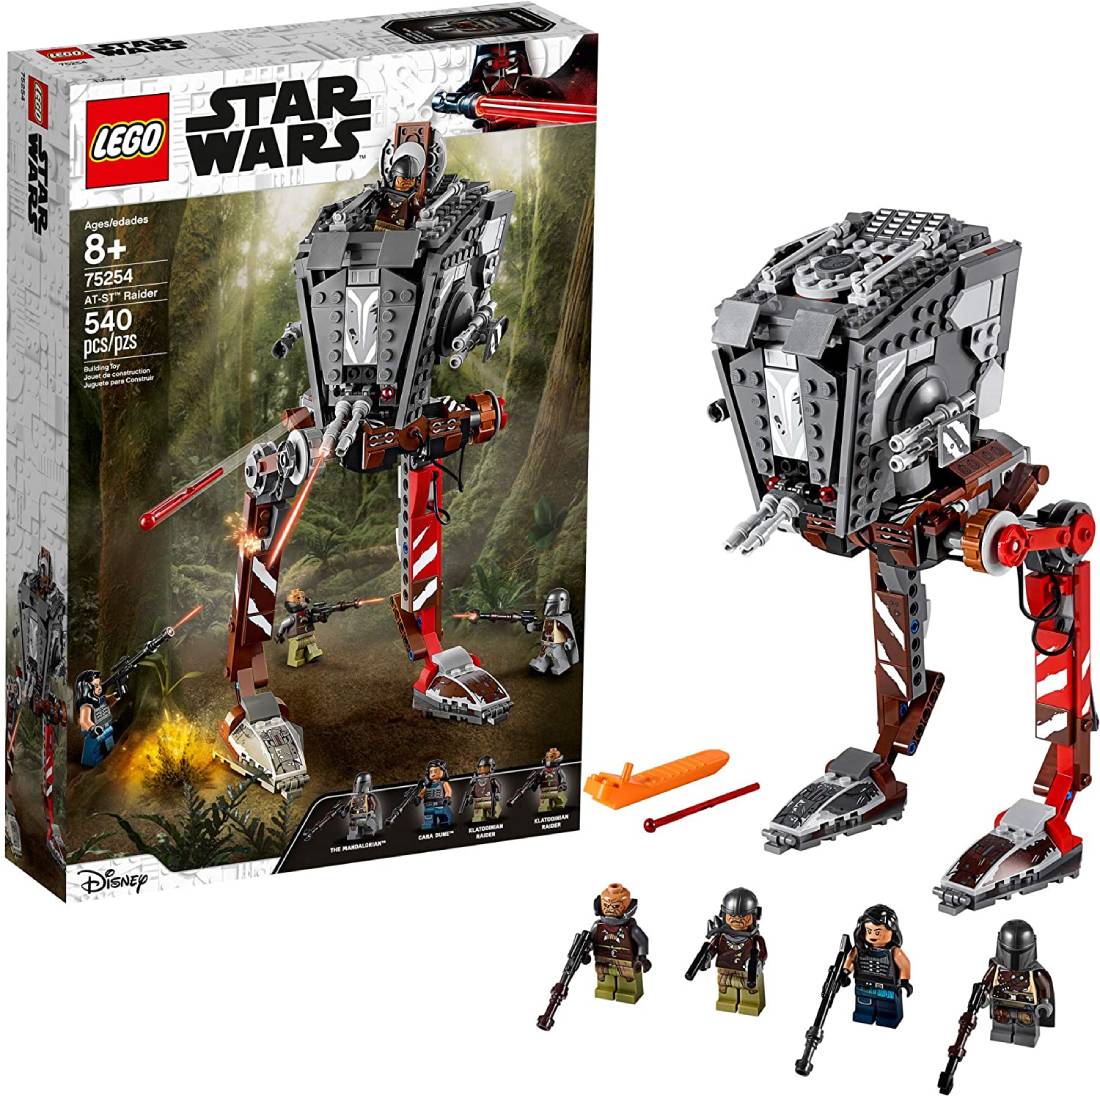 LEGO Star Wars AT-ST Raider 75254 The Mandalorian 540 piezas